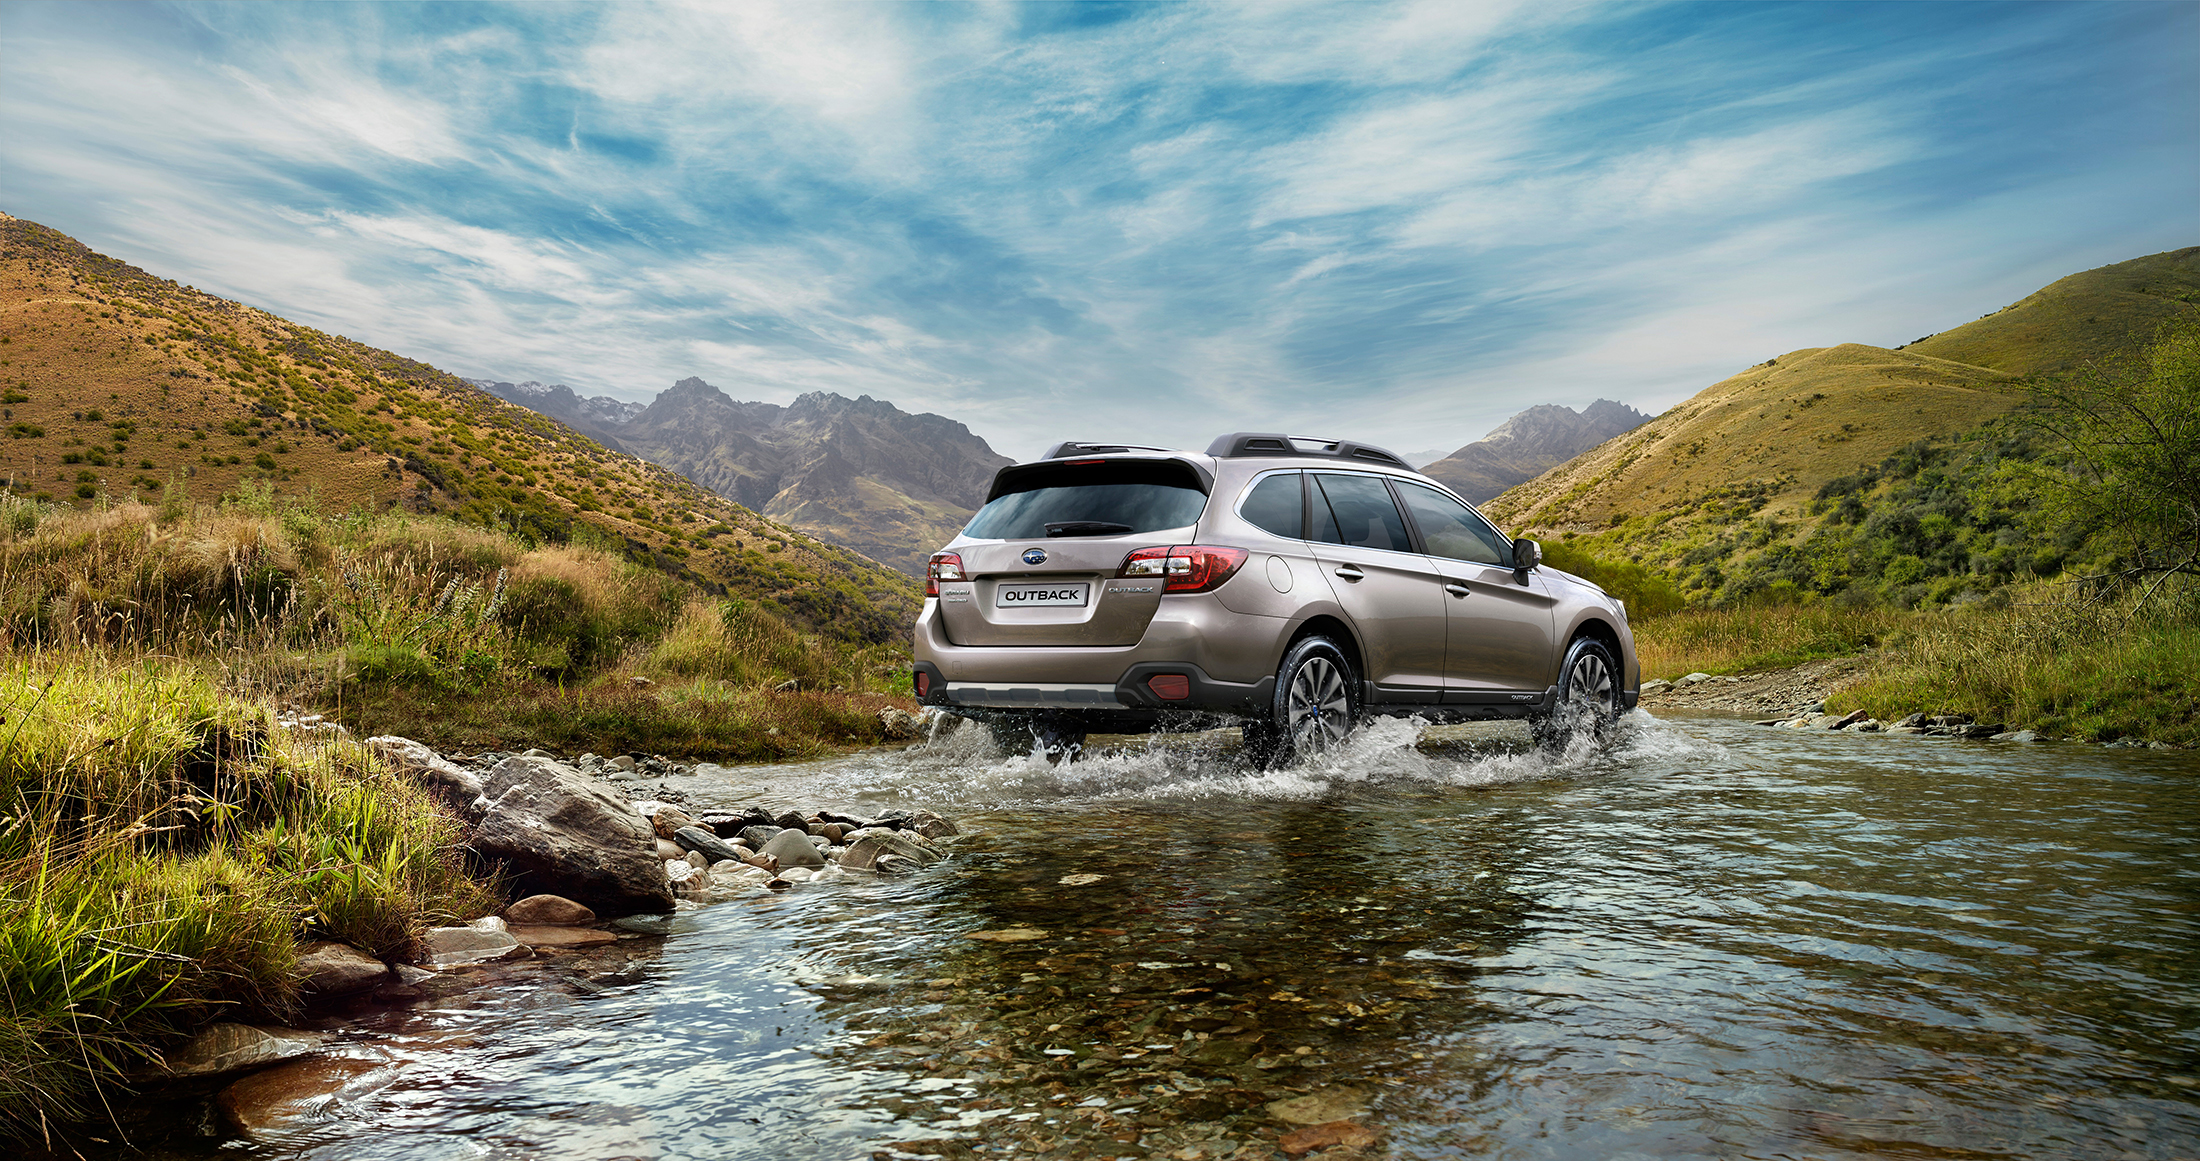 Subaru Outback HD Wallpaper | Background Image | 2200x1161 | ID:693156